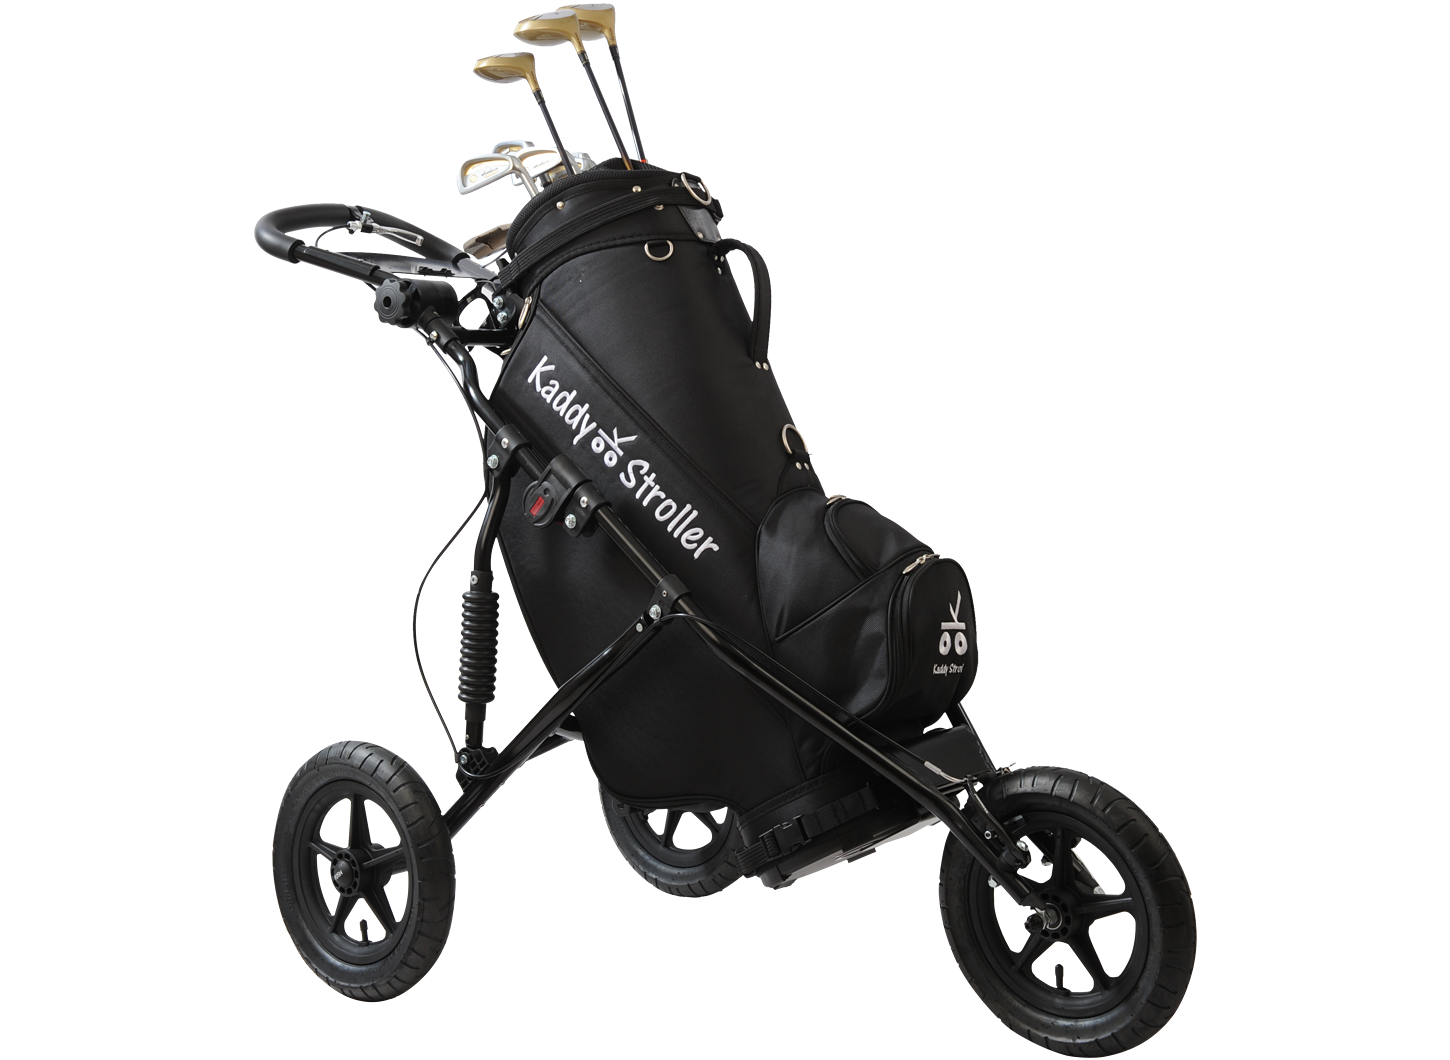 baby stroller golf push cart